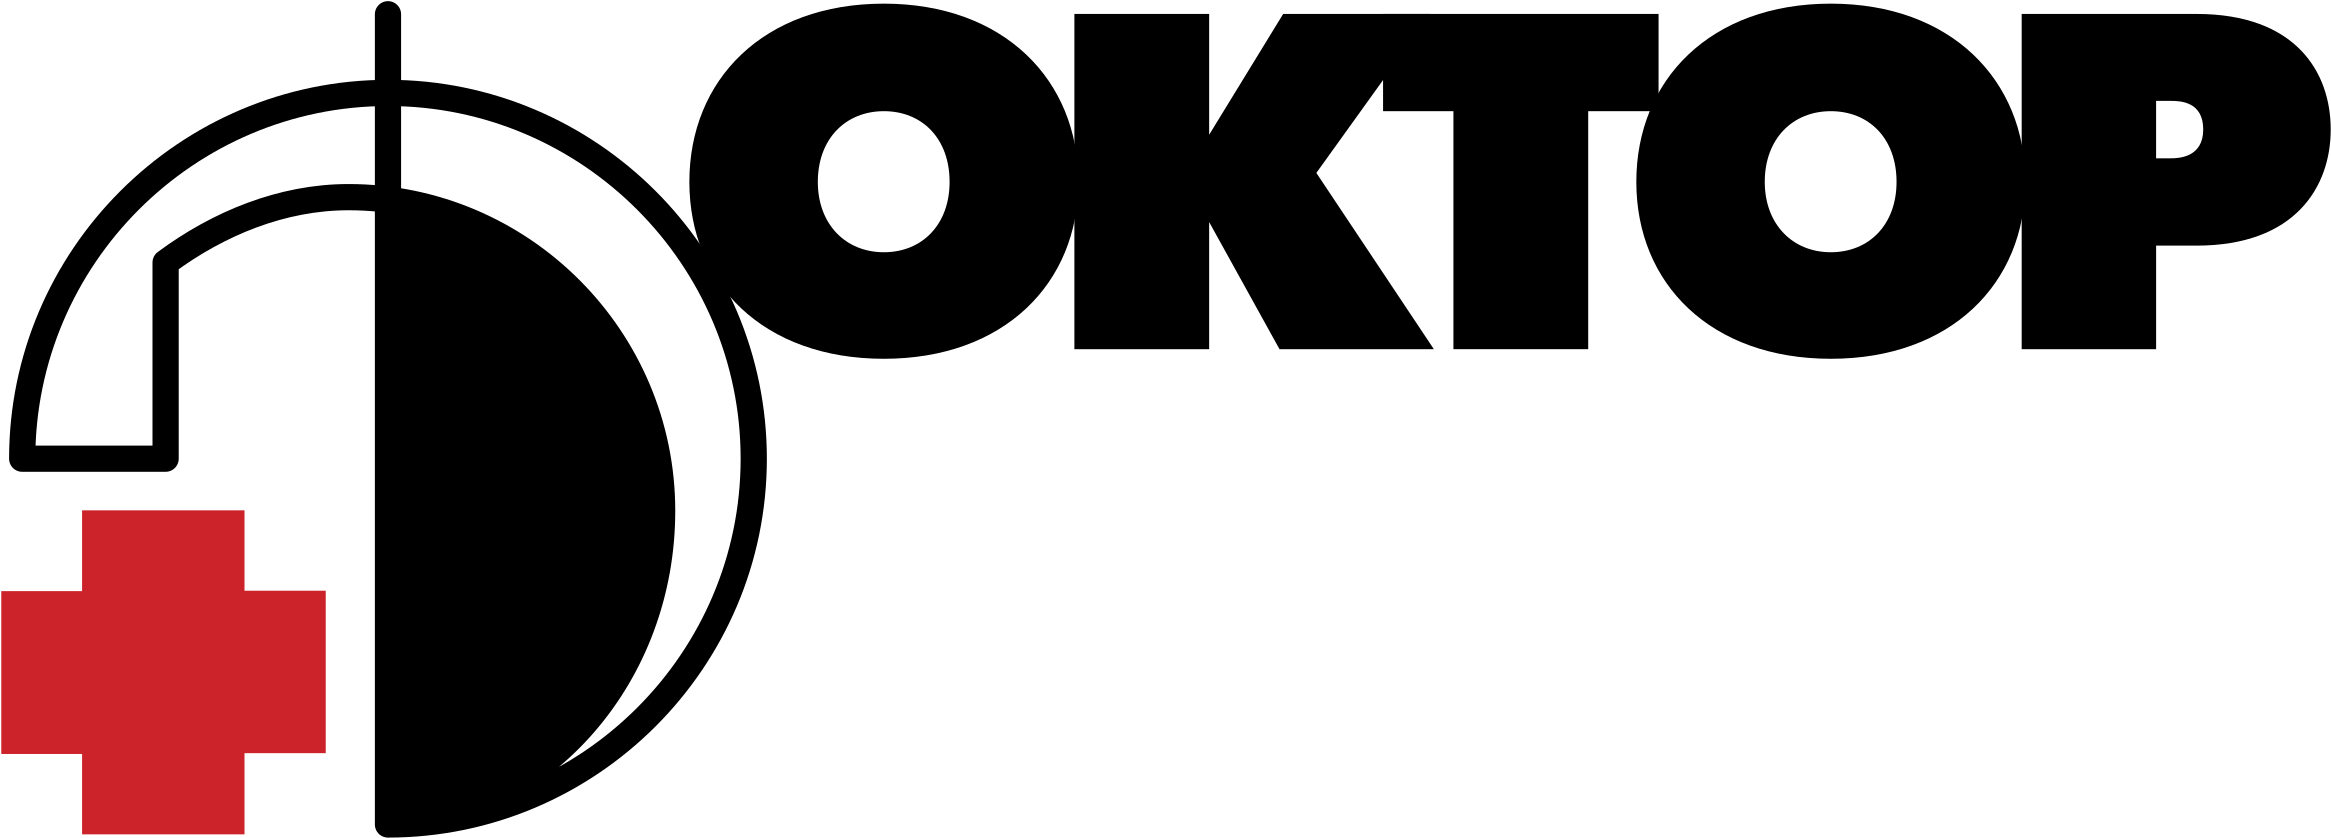 Doctor Logo Png Transparent - Logo (2400x2400)